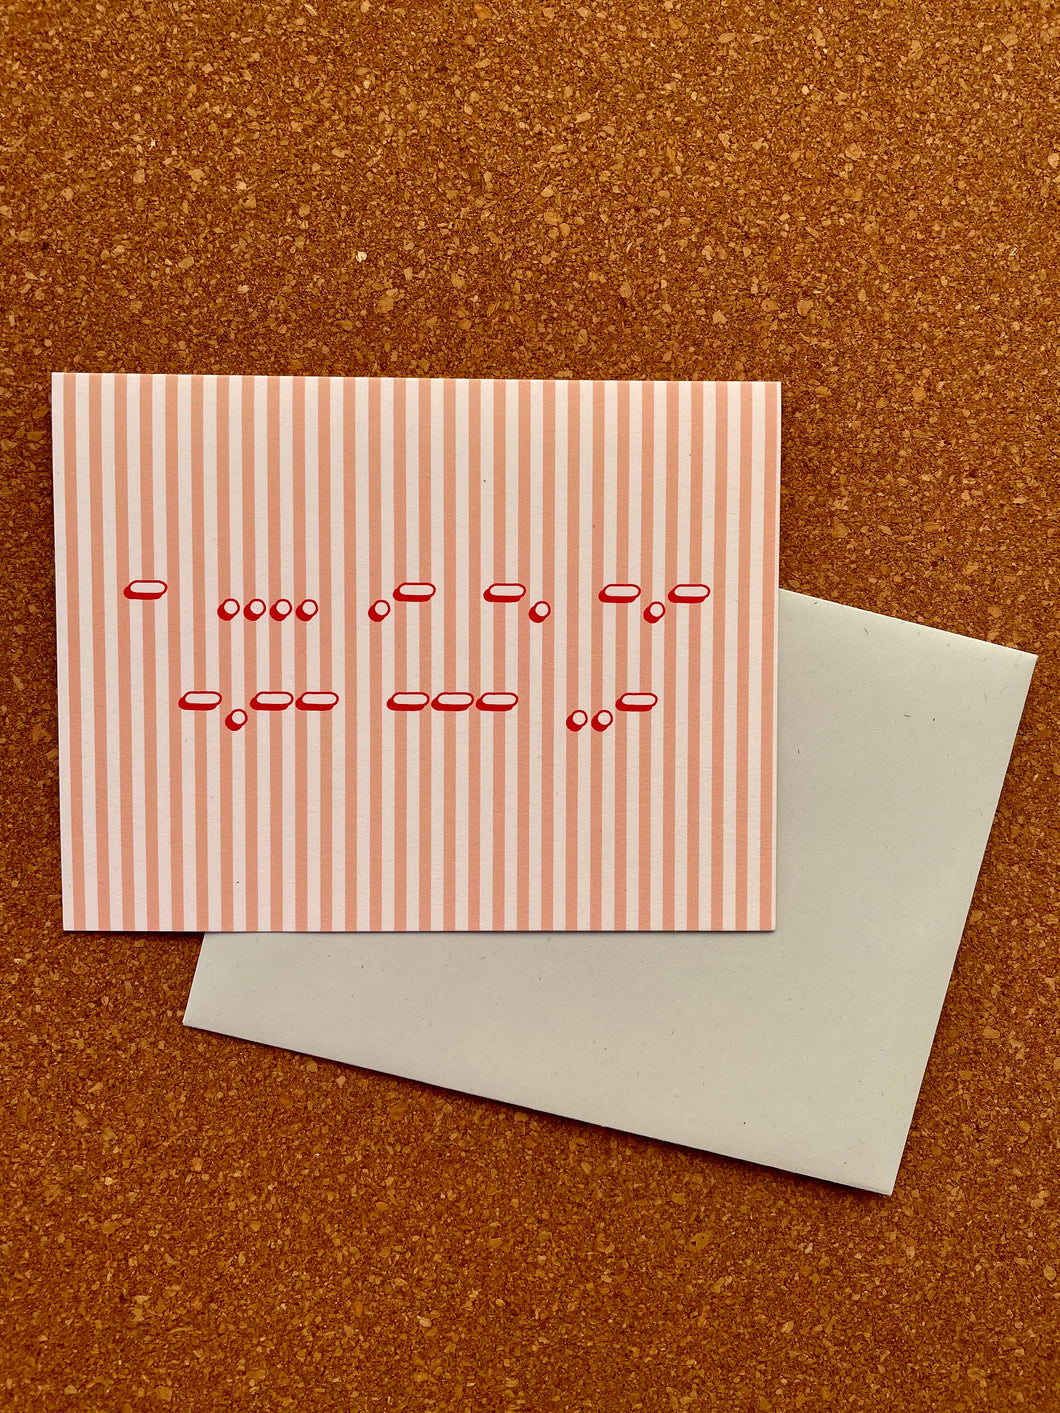 International Friendship Greeting Card - Morse Code Thank You